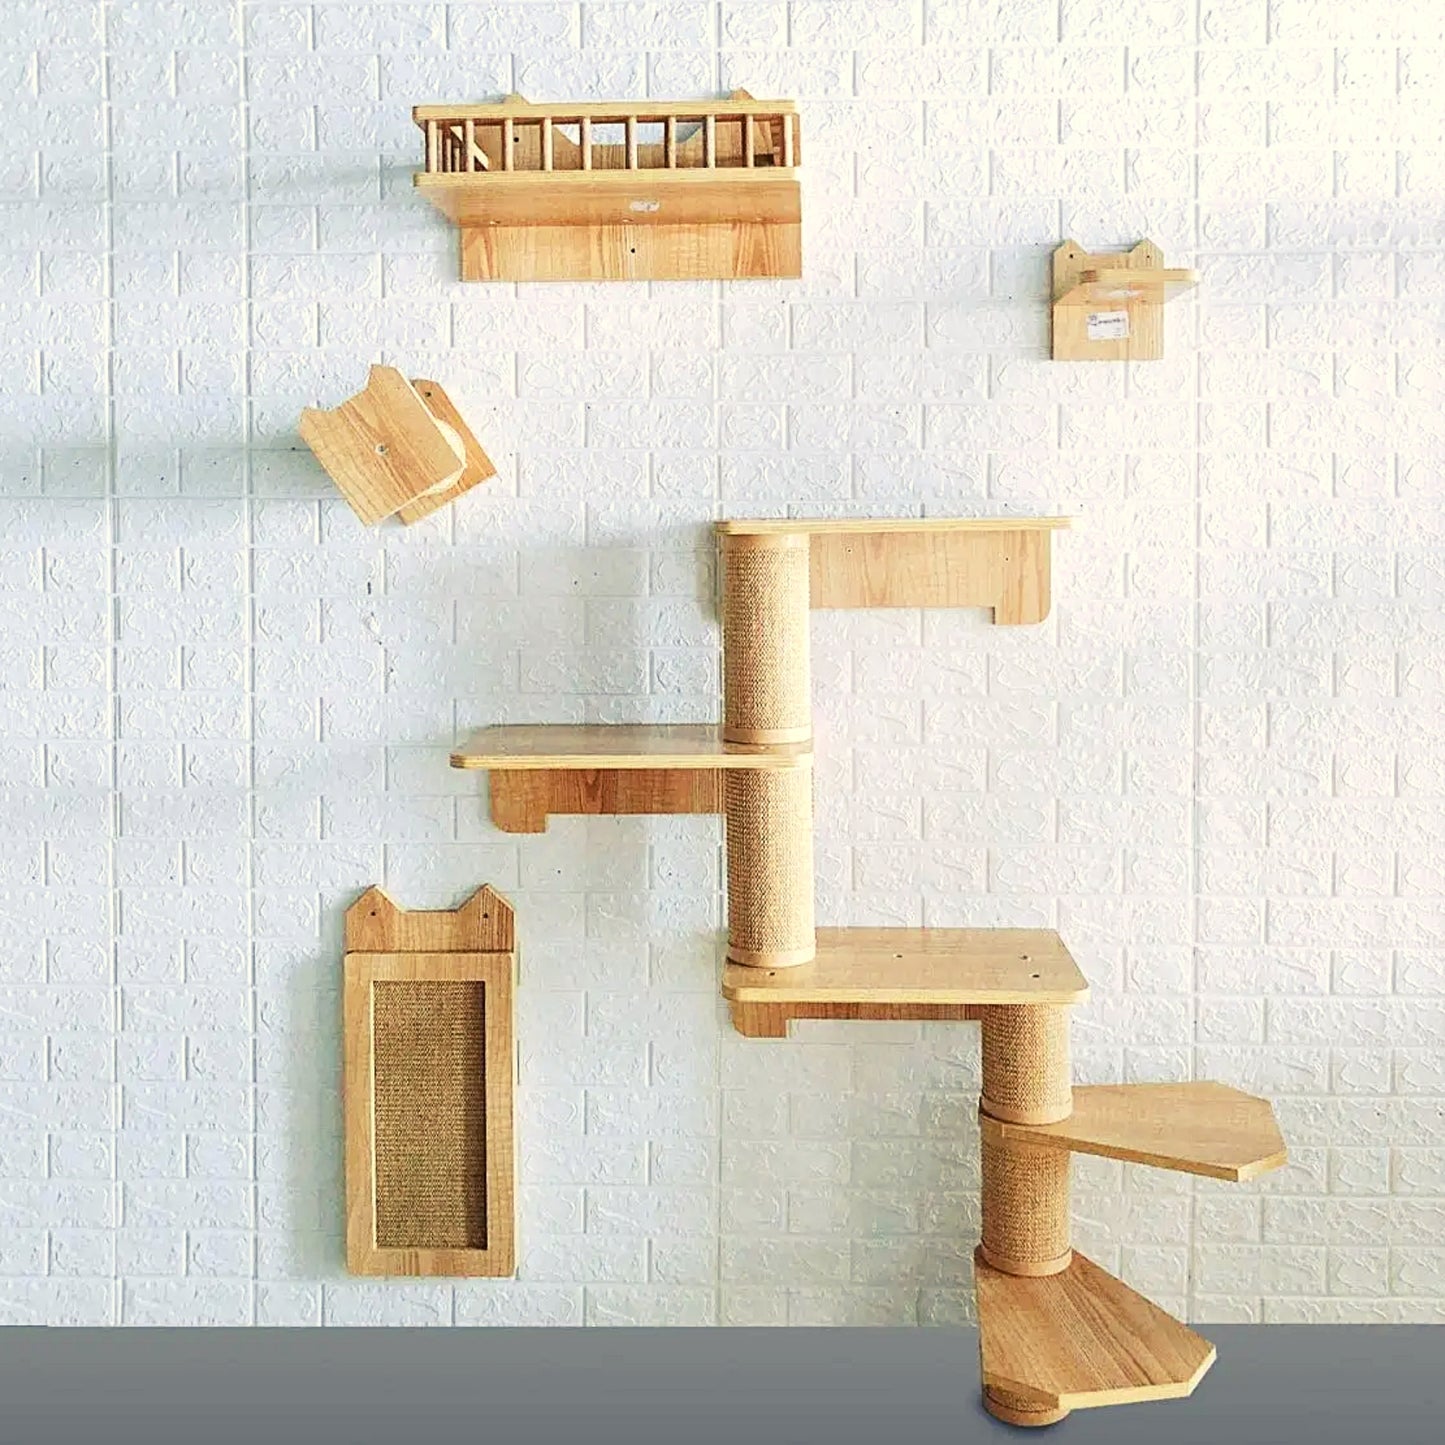 Midlee Cat Wall Shelves Climber Furniture- Medium- Perch Activity Wooden Tree